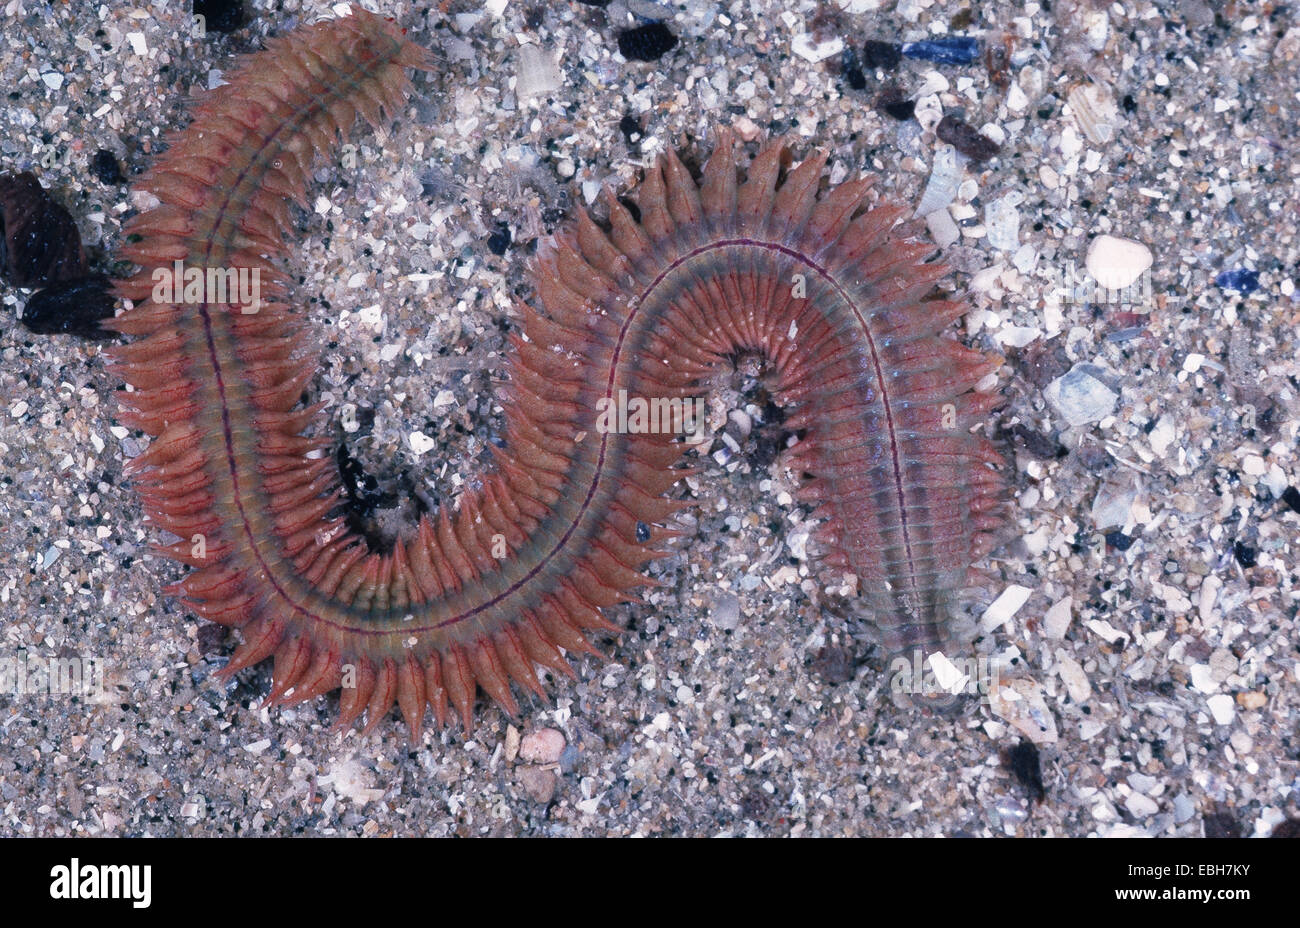 estuary ragworm (Nereis diversicolor). Stock Photo